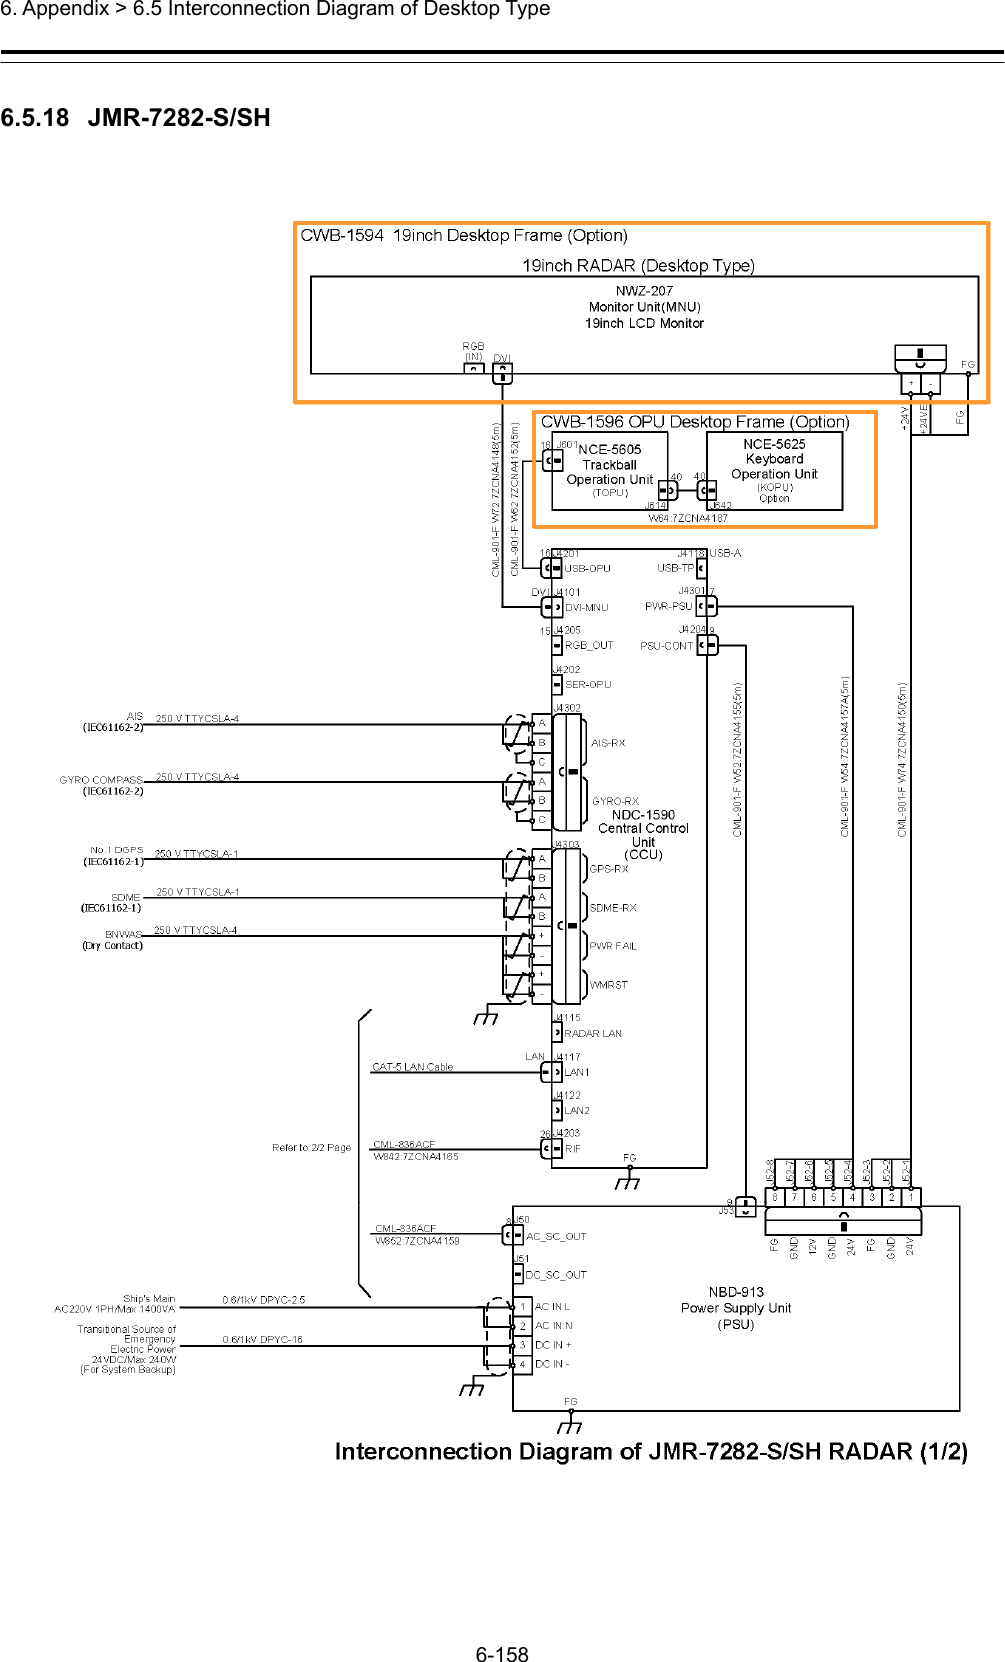  6. Appendix &gt; 6.5 Interconnection Diagram of Desktop Type 6-158  6.5.18  JMR-7282-S/SH  